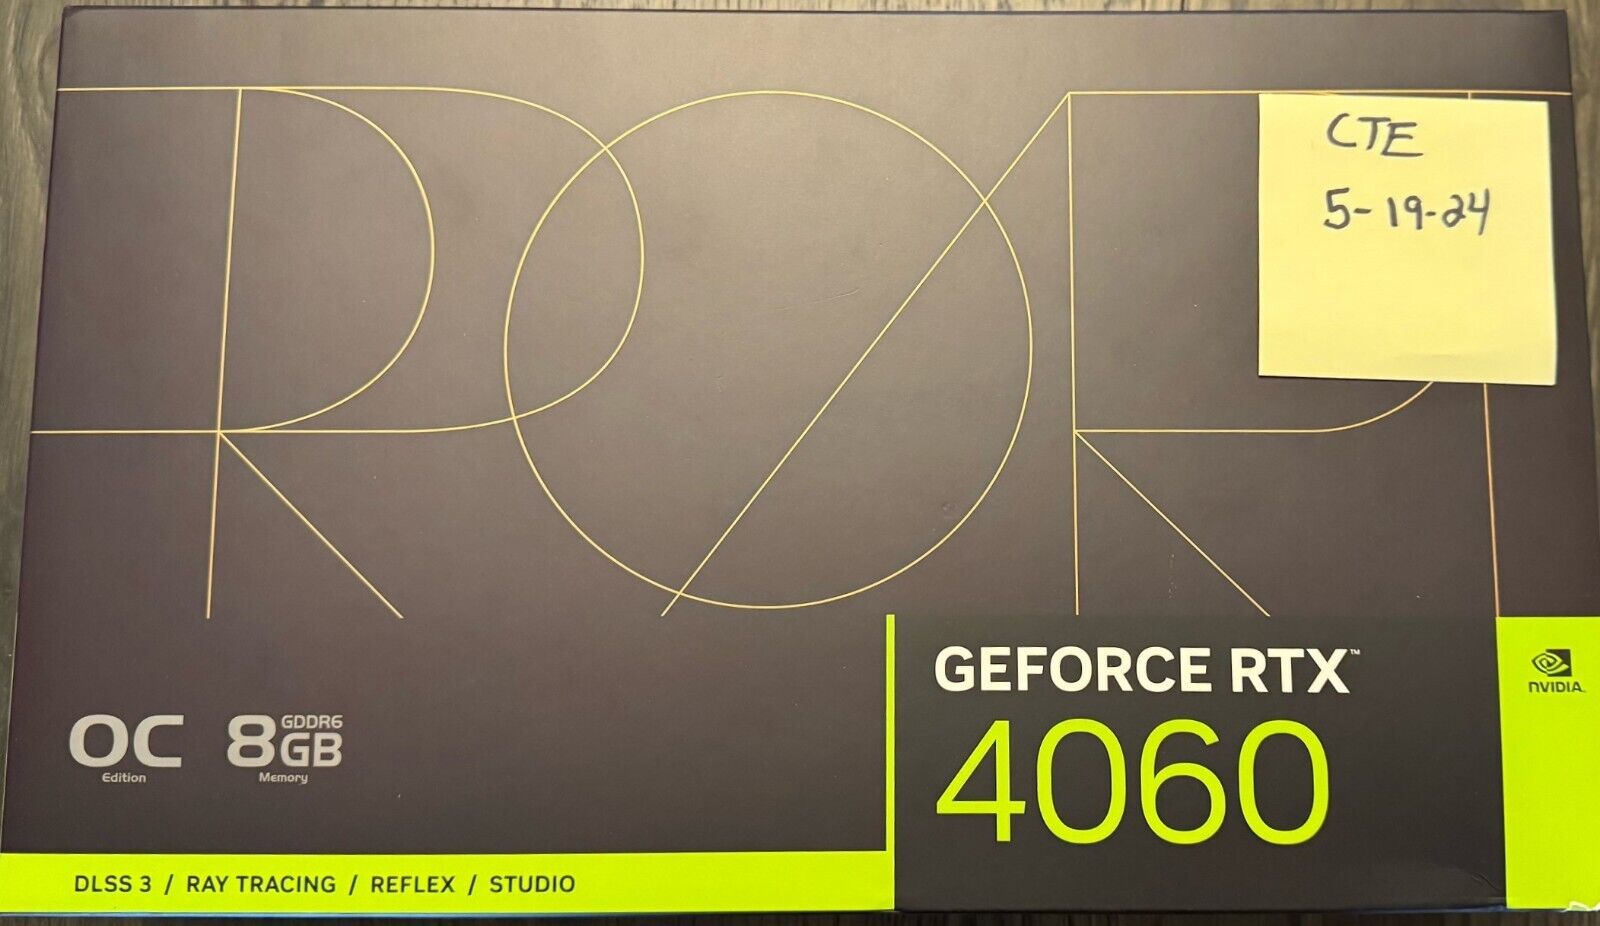 Asus NVIDIA GeForce RTX 4060 Graphic Card - 8 GB GDDR6 (proart-rtx4060-o8g)